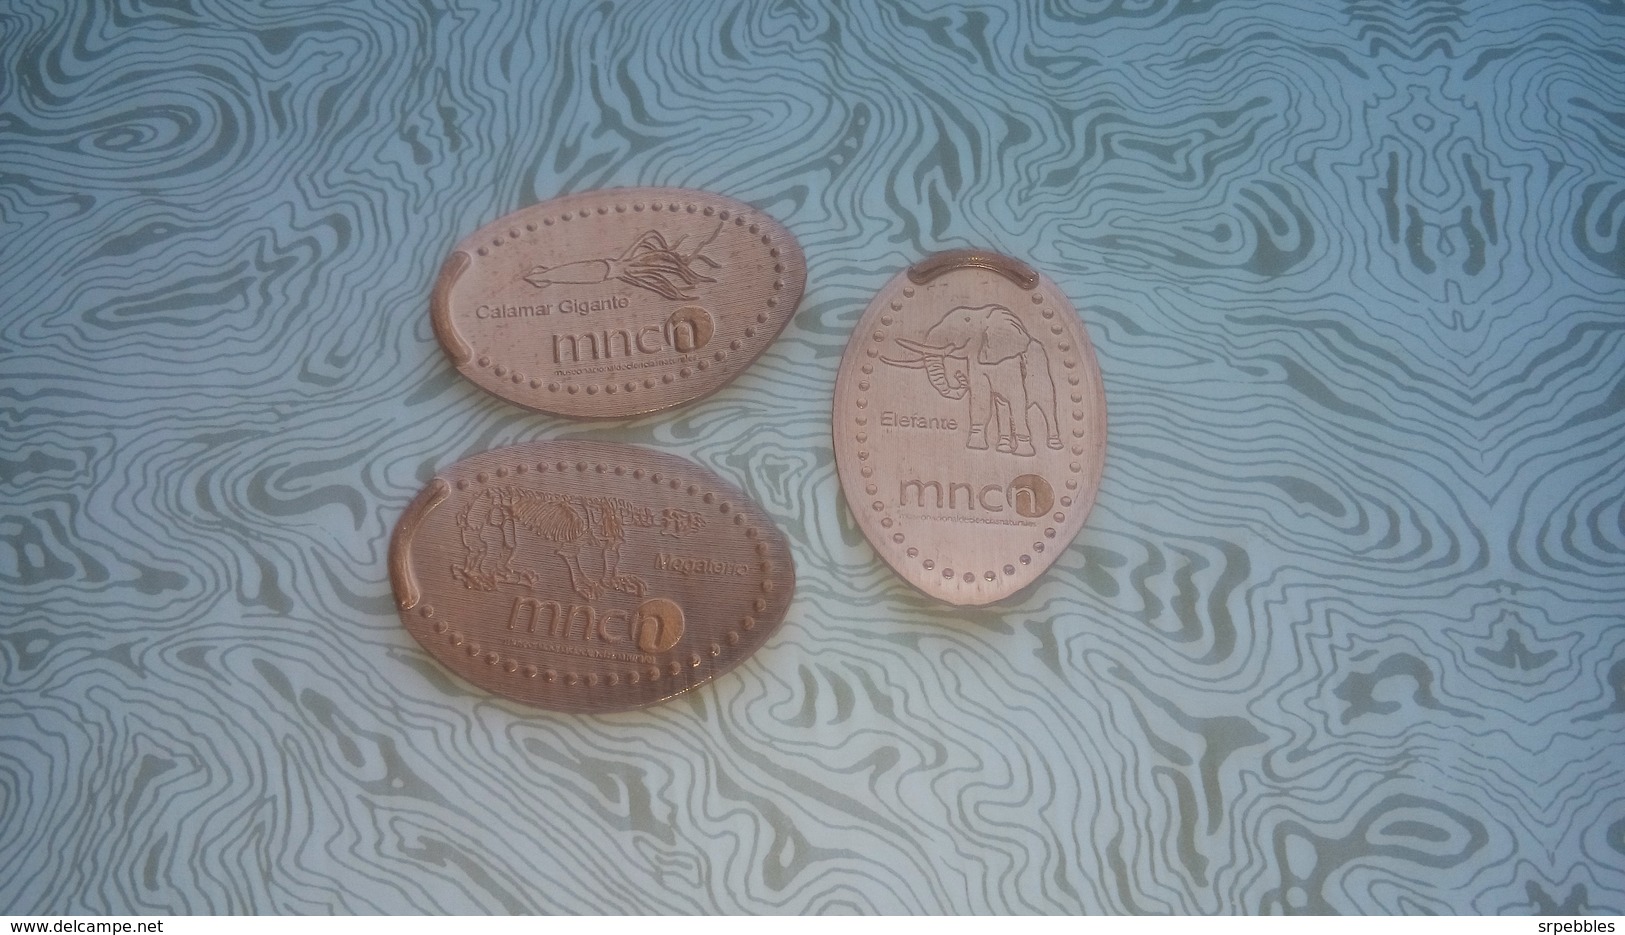 ¡¡NUEVO!! MUSEO NACIONAL DE CIENCIAS NATURALES MADRID - M063 - Moneda Elongada - Elongated Coin - Smashed Coin - Monete Allungate (penny Souvenirs)